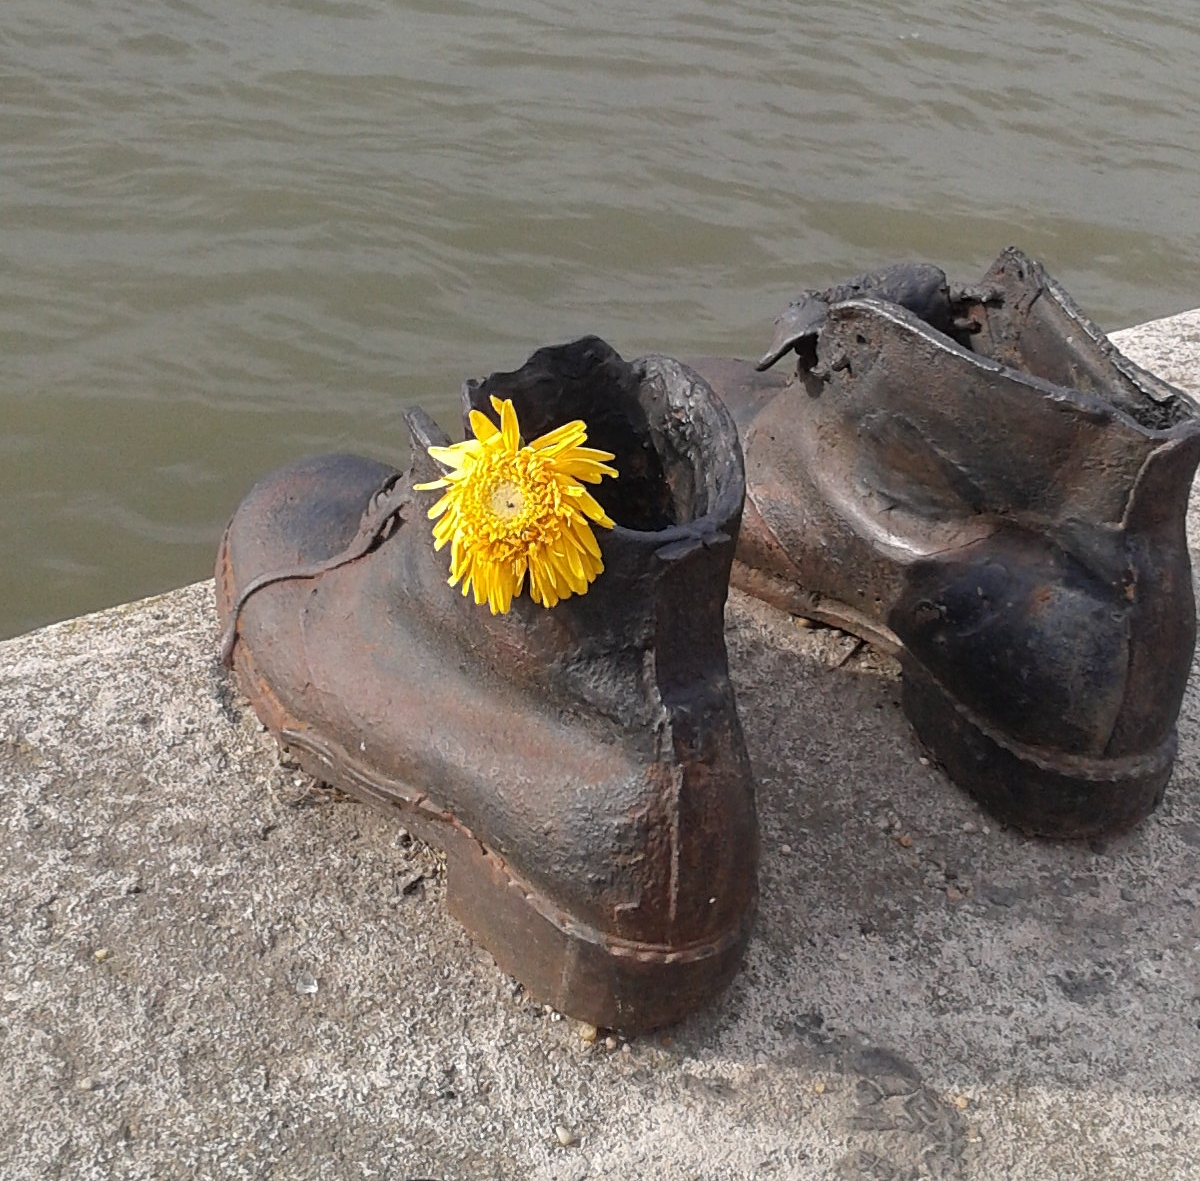 "Buty na brzegu Dunaju"